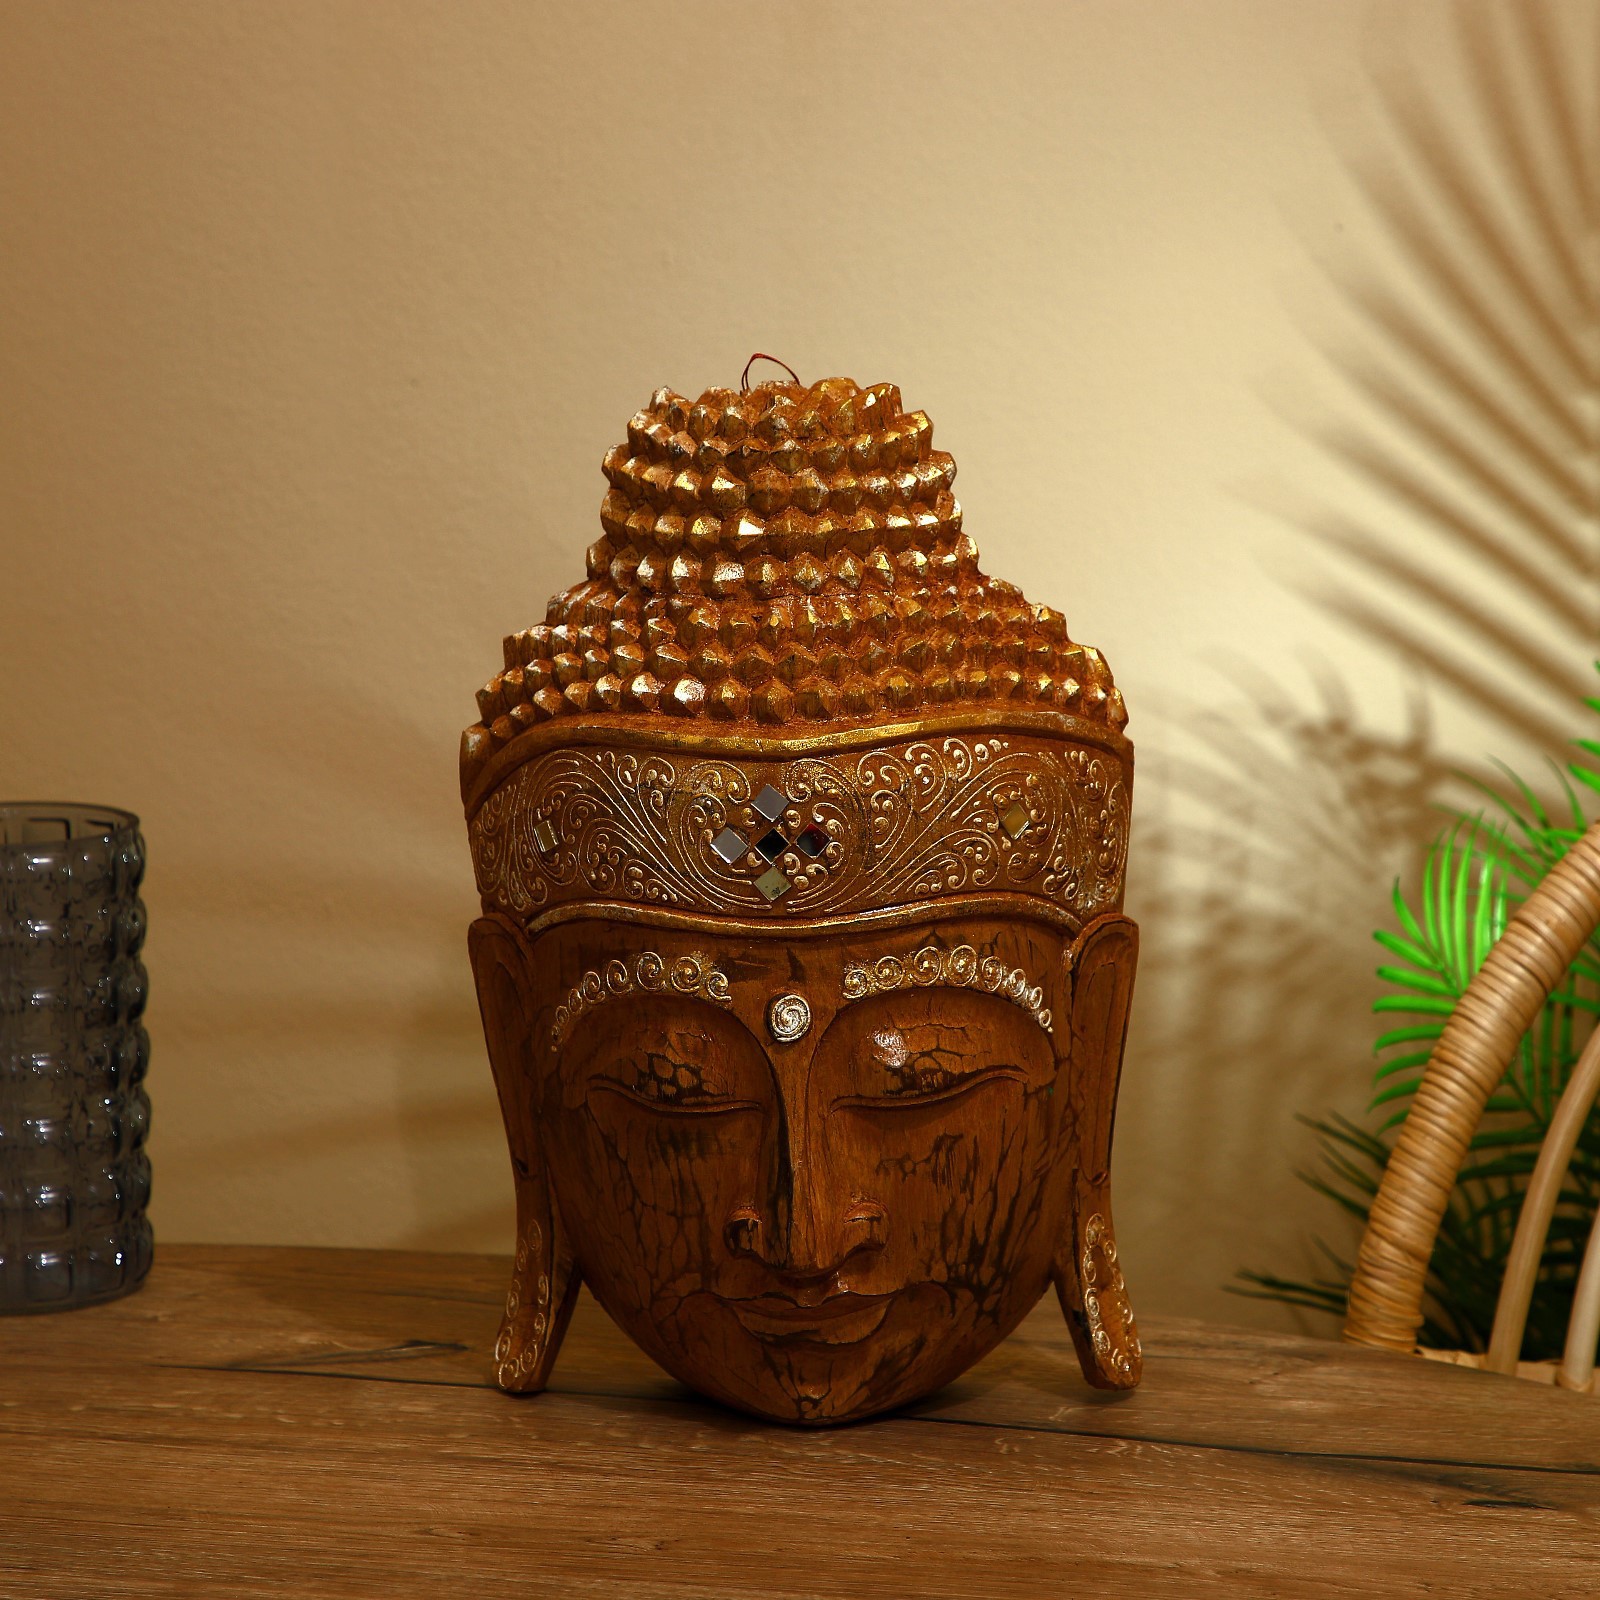 91005613 Интерьерный сувенир "Голова Будды" бежевый 40 см STLM-0436416 SIMALAND